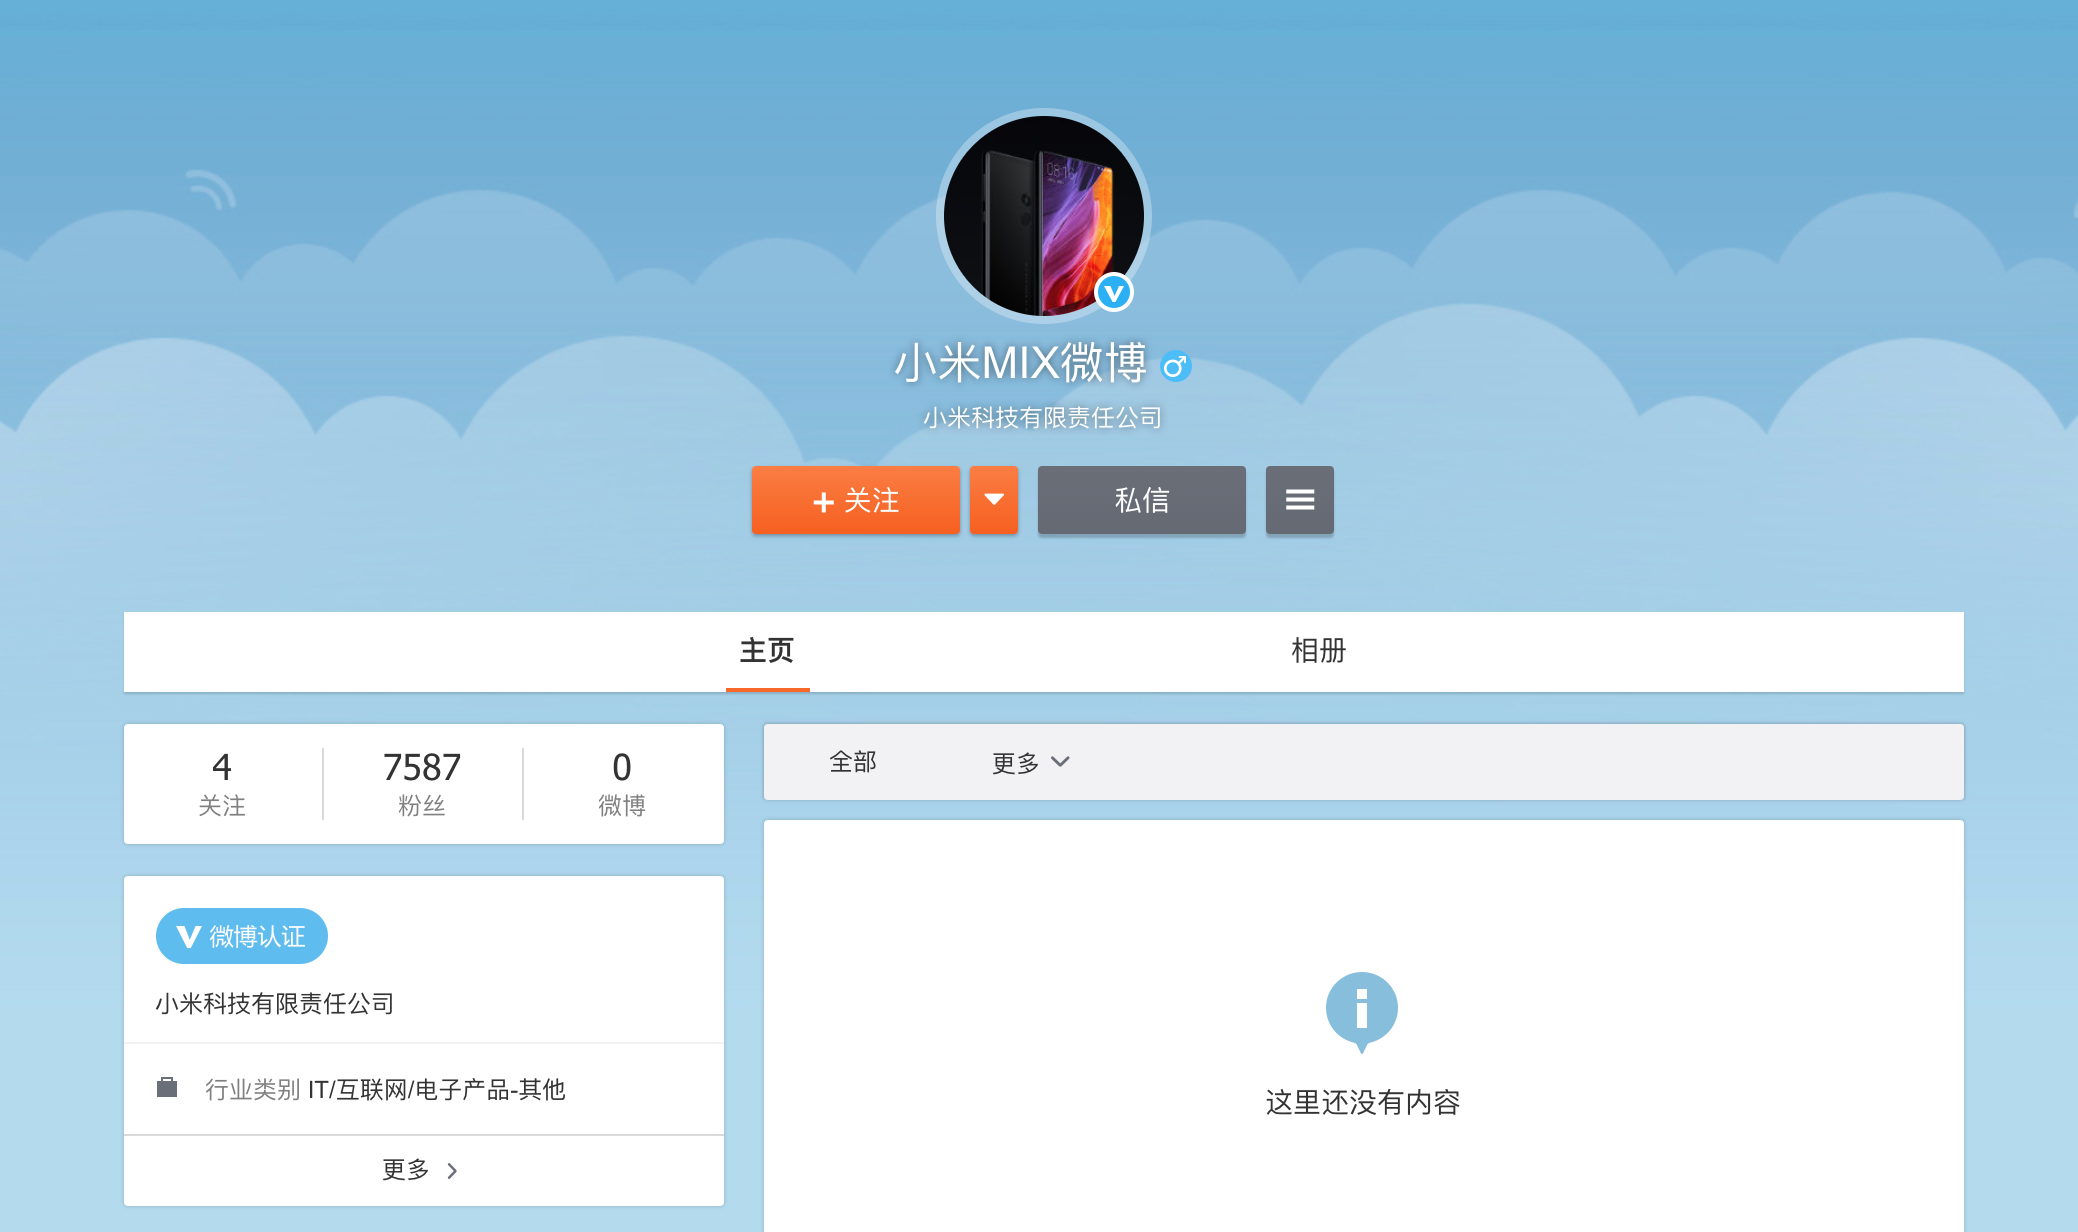 New Xiaomi MIX Weibo Account